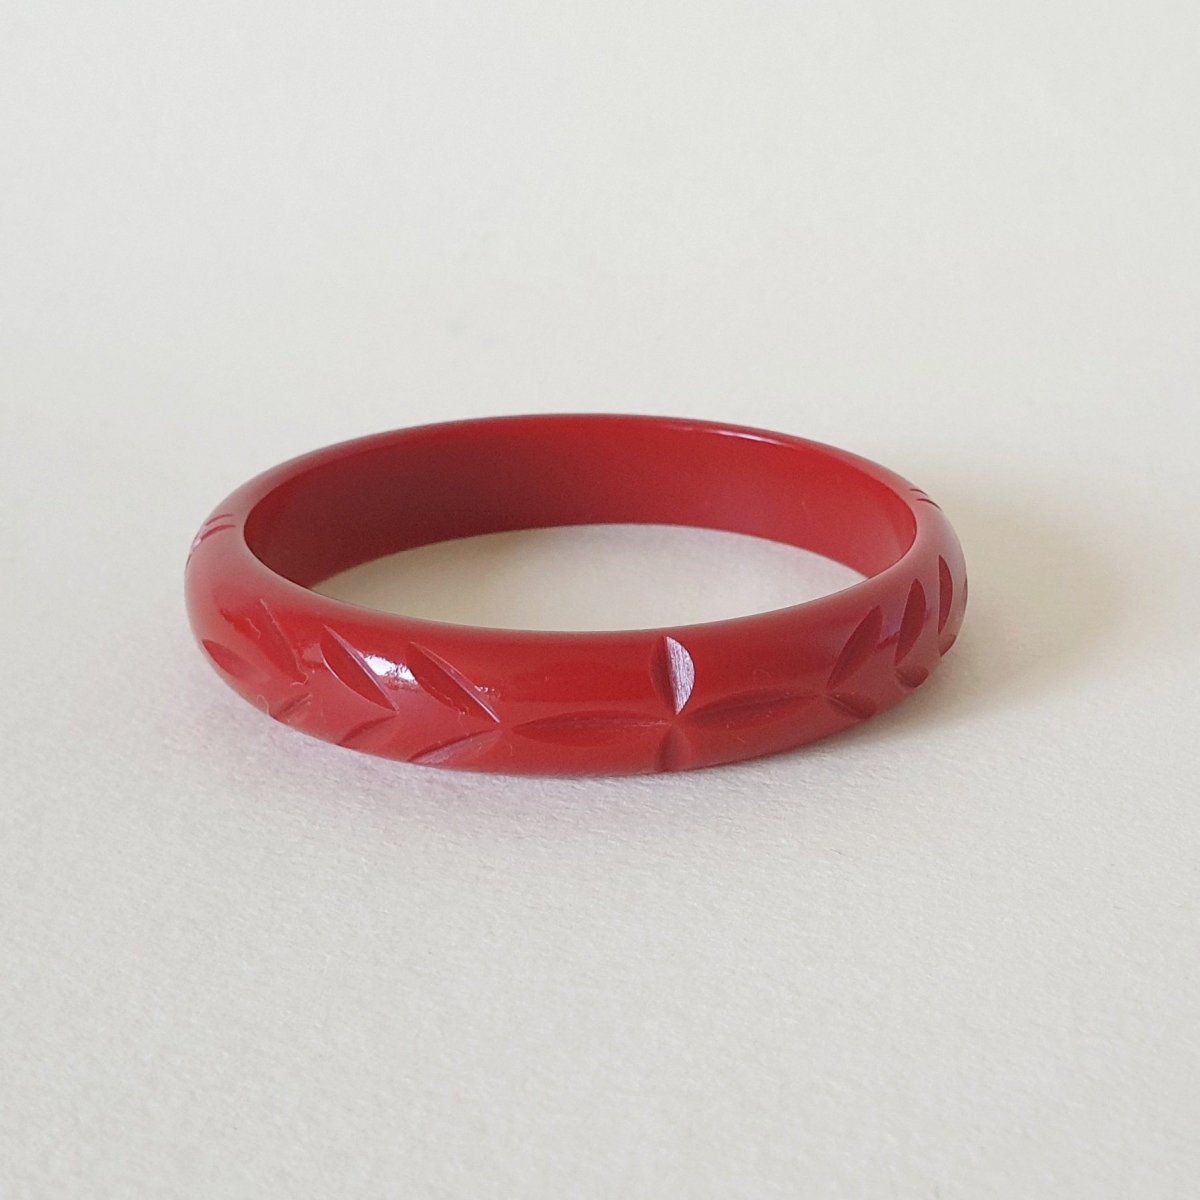 elsie-carved-fakelite-bangle-cherry-red-more-sizes-bow-crossbones-ltd-470816_1024x1024_2x_32c201fd-5e3c-45c8-acf1-1ed1547f9a33